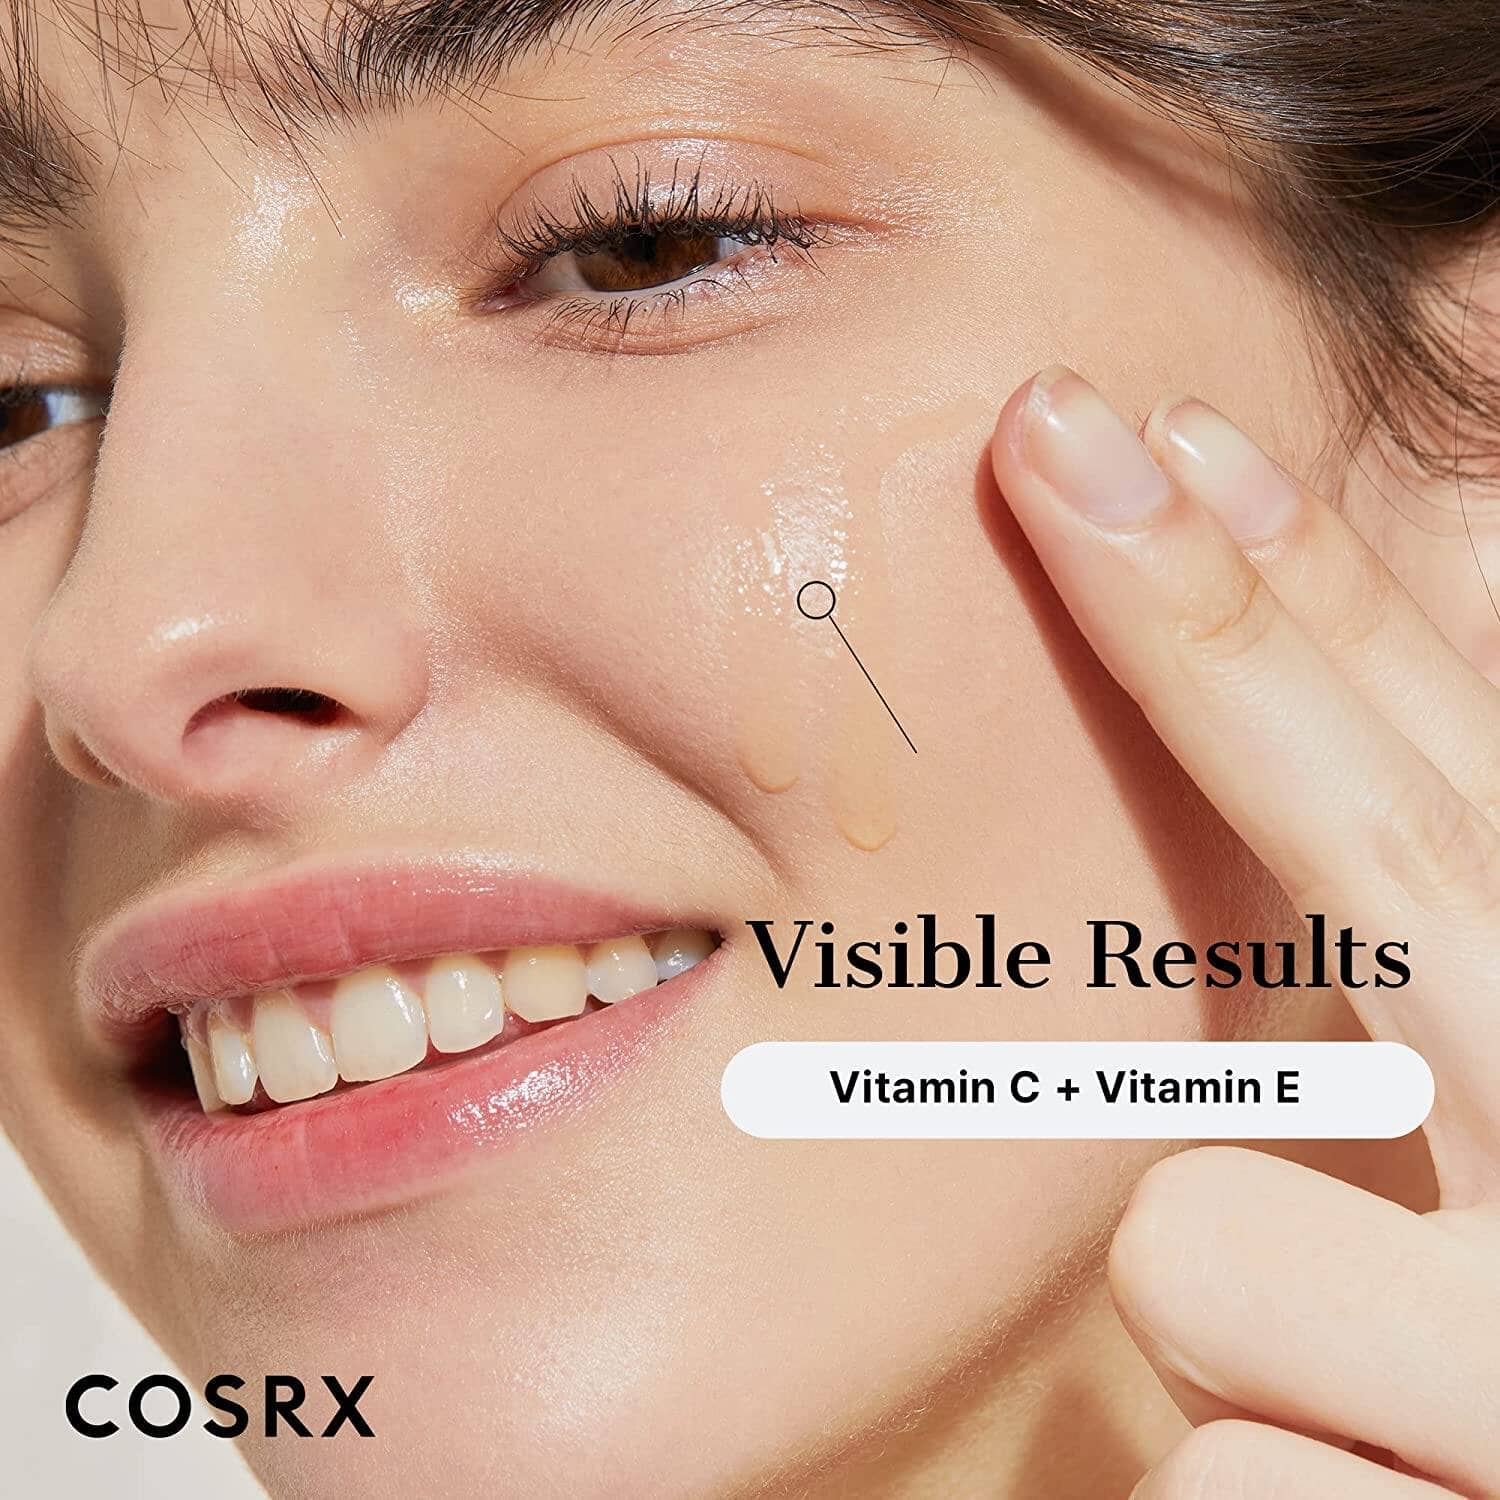 COSRX The Vitamin C 23 Serum 20ml Skin Care COSRX ORION XO Sri Lanka